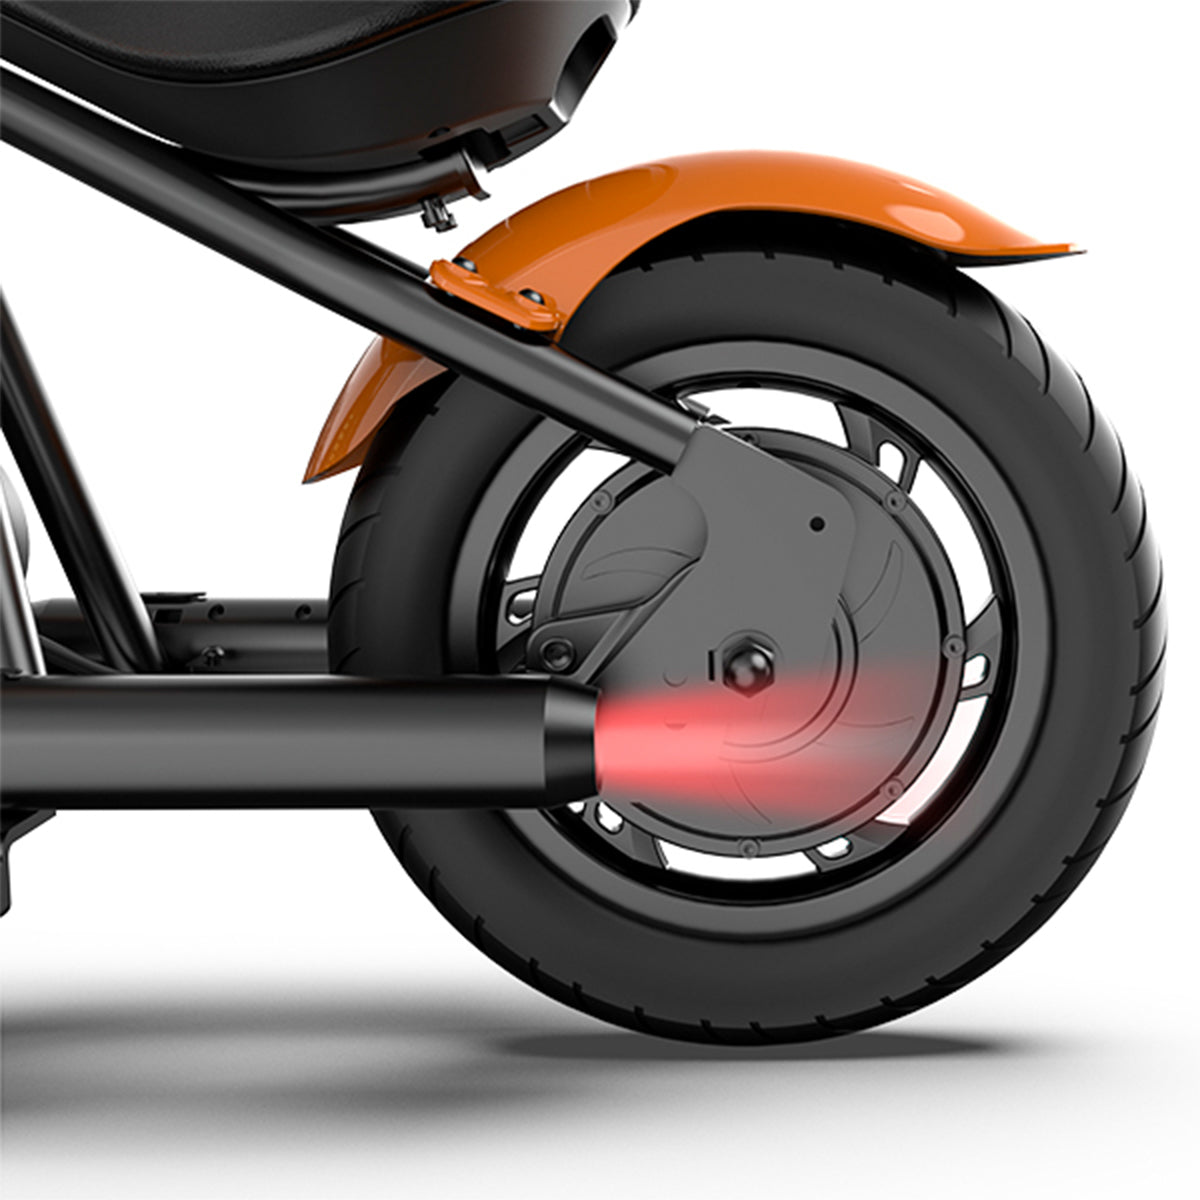 HYPER GOGO Cruiser 12 Electric Motorcycle for Kids 12km Range